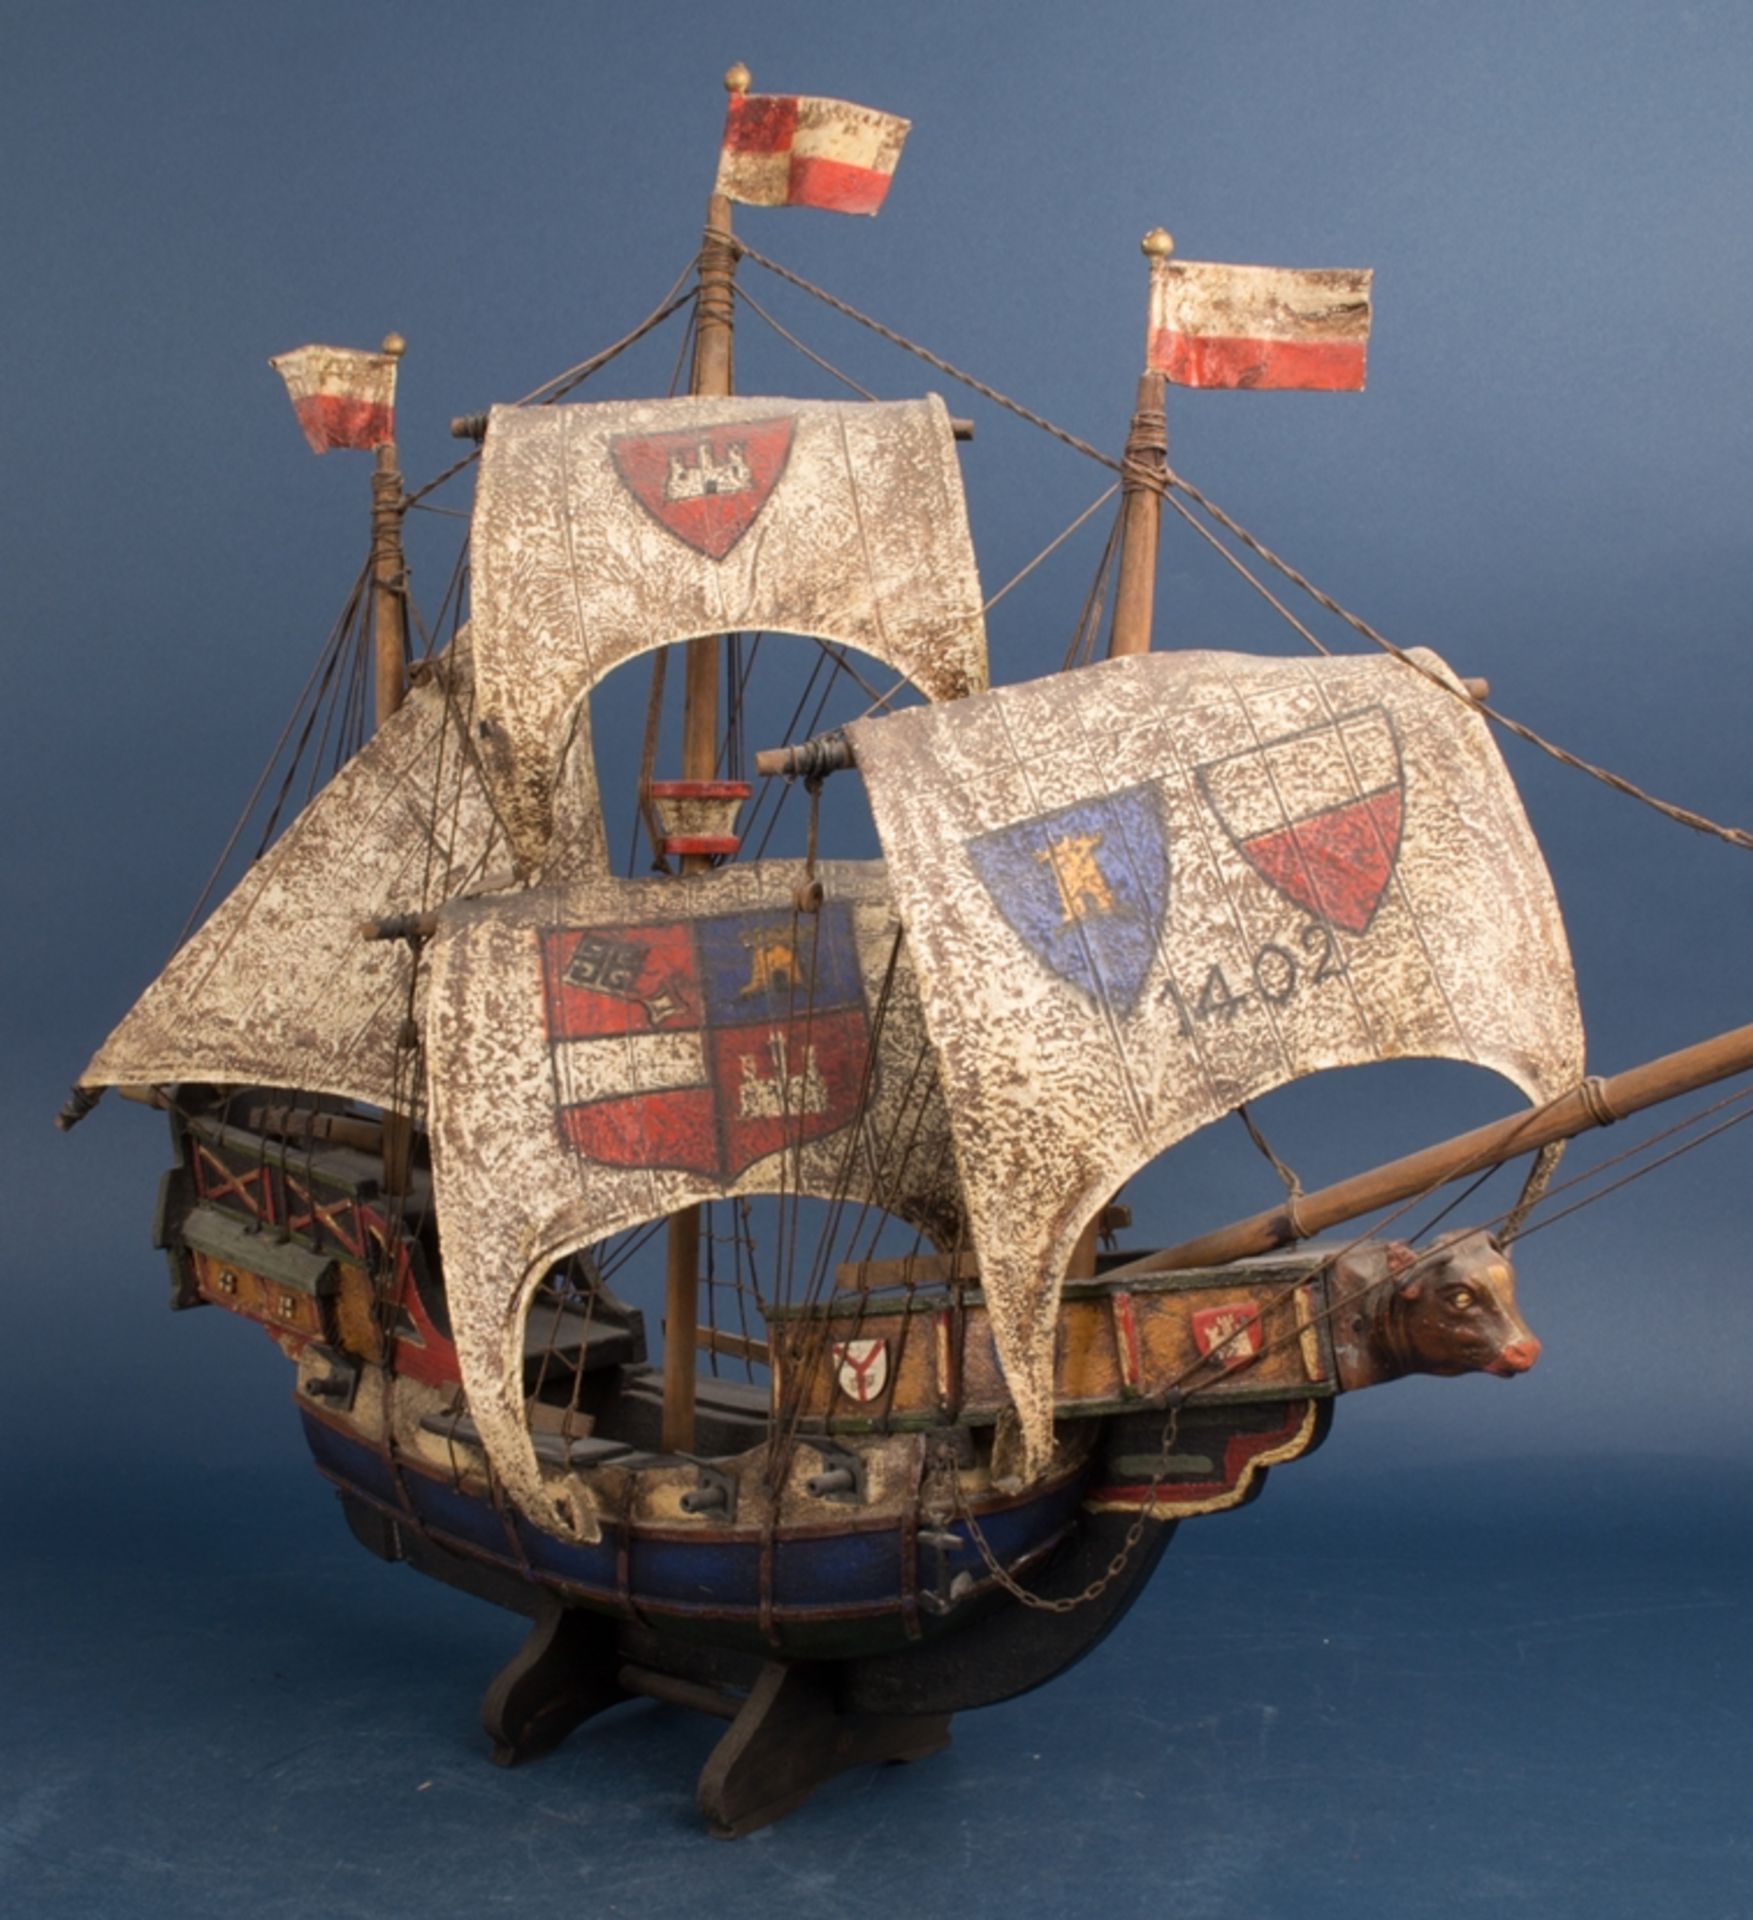 "BUNTE KUH" - Modellschiff, 2. Drittel 20. Jhdt., betitelt, Holz geschnitzt, farbig gefasst, textile